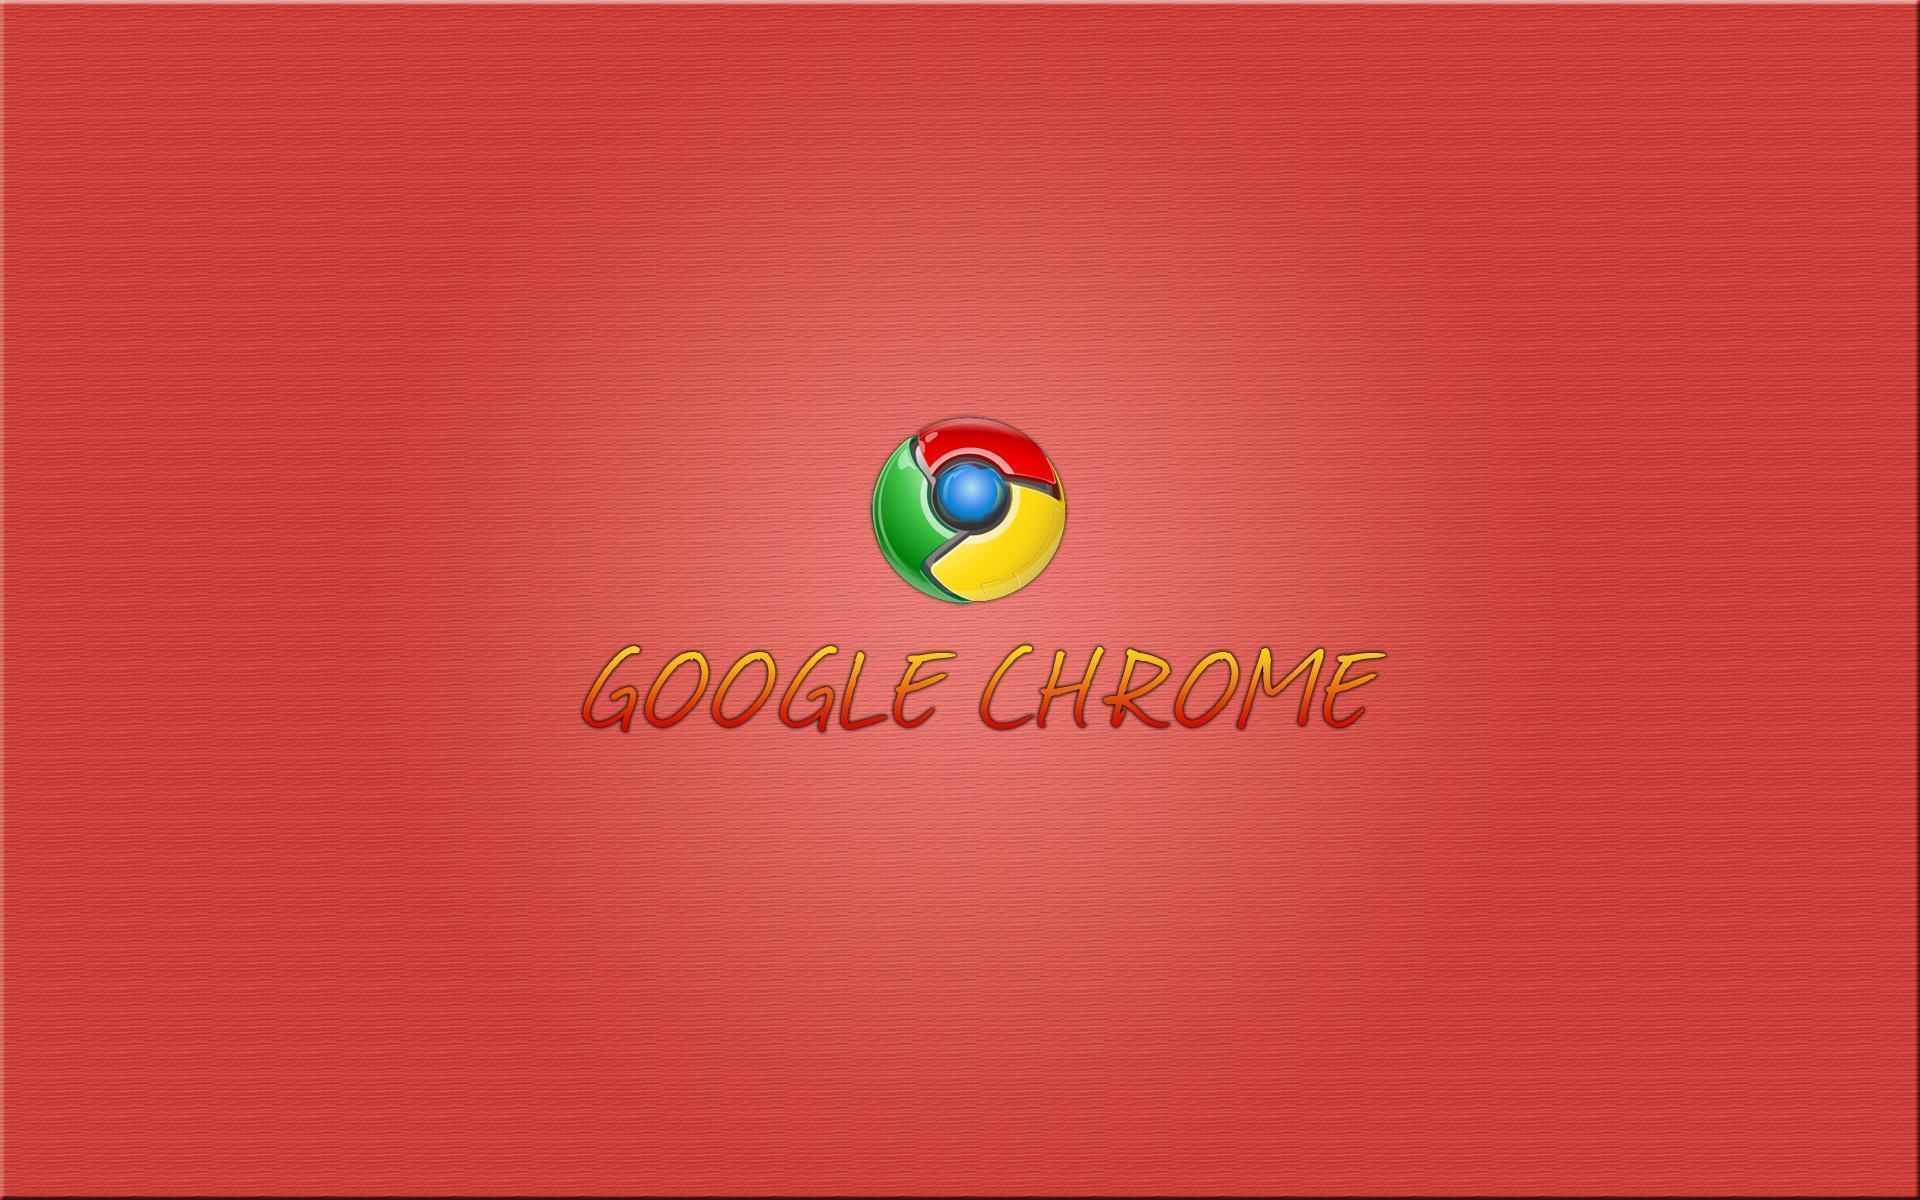 Google Chrome Wallpaper. HD Wallpaper , Picture, image